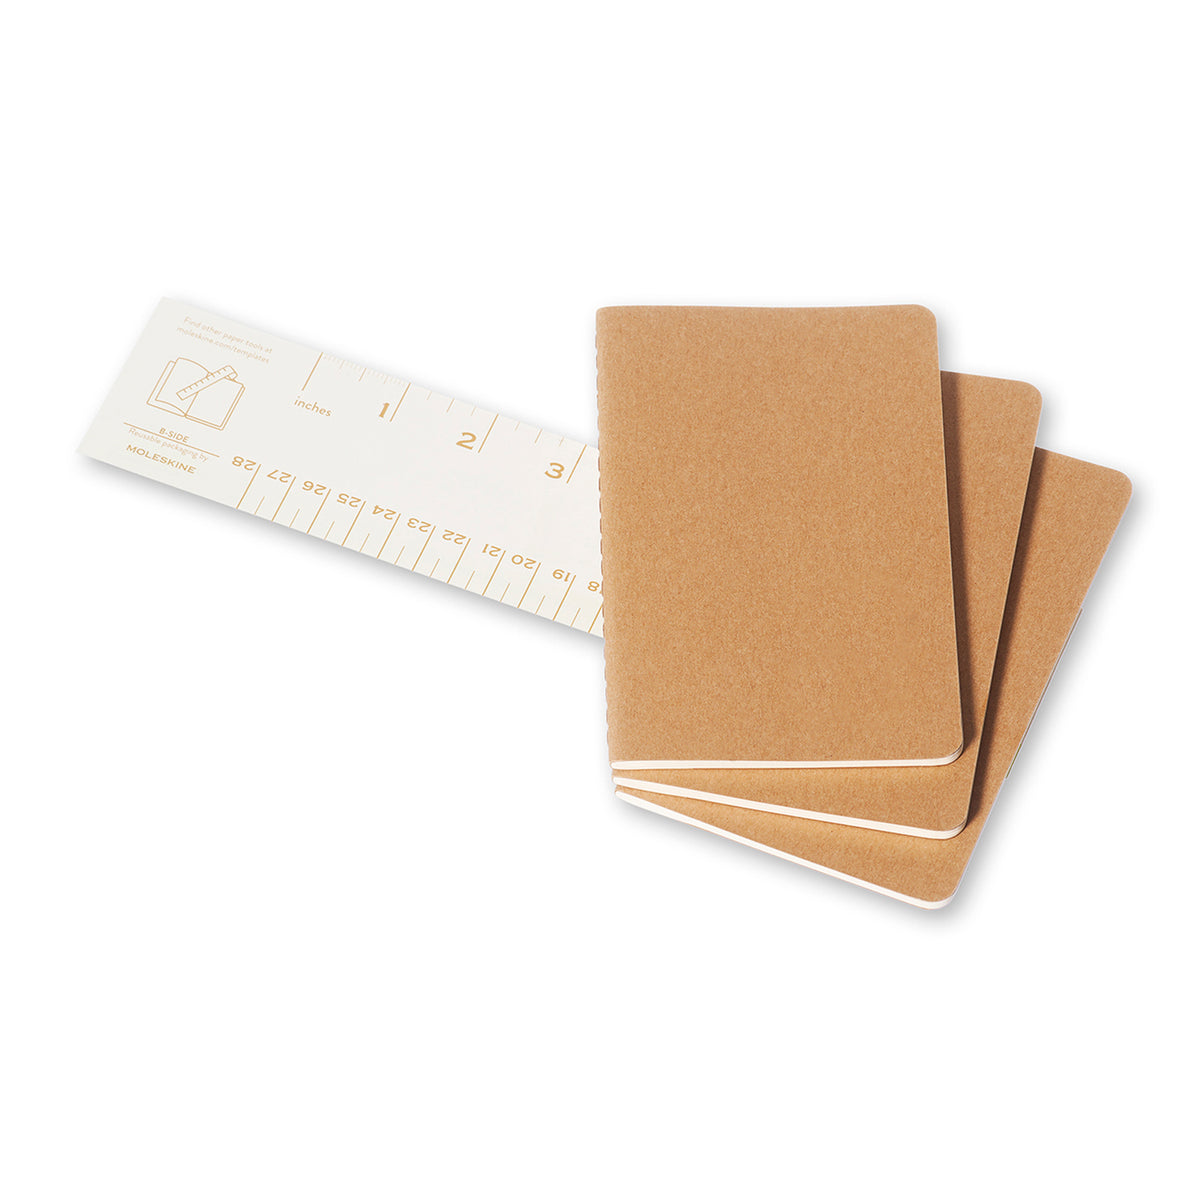 Moleskine - Cahier Notebook - Set of 3 - Ruled - Pocket - Kraft